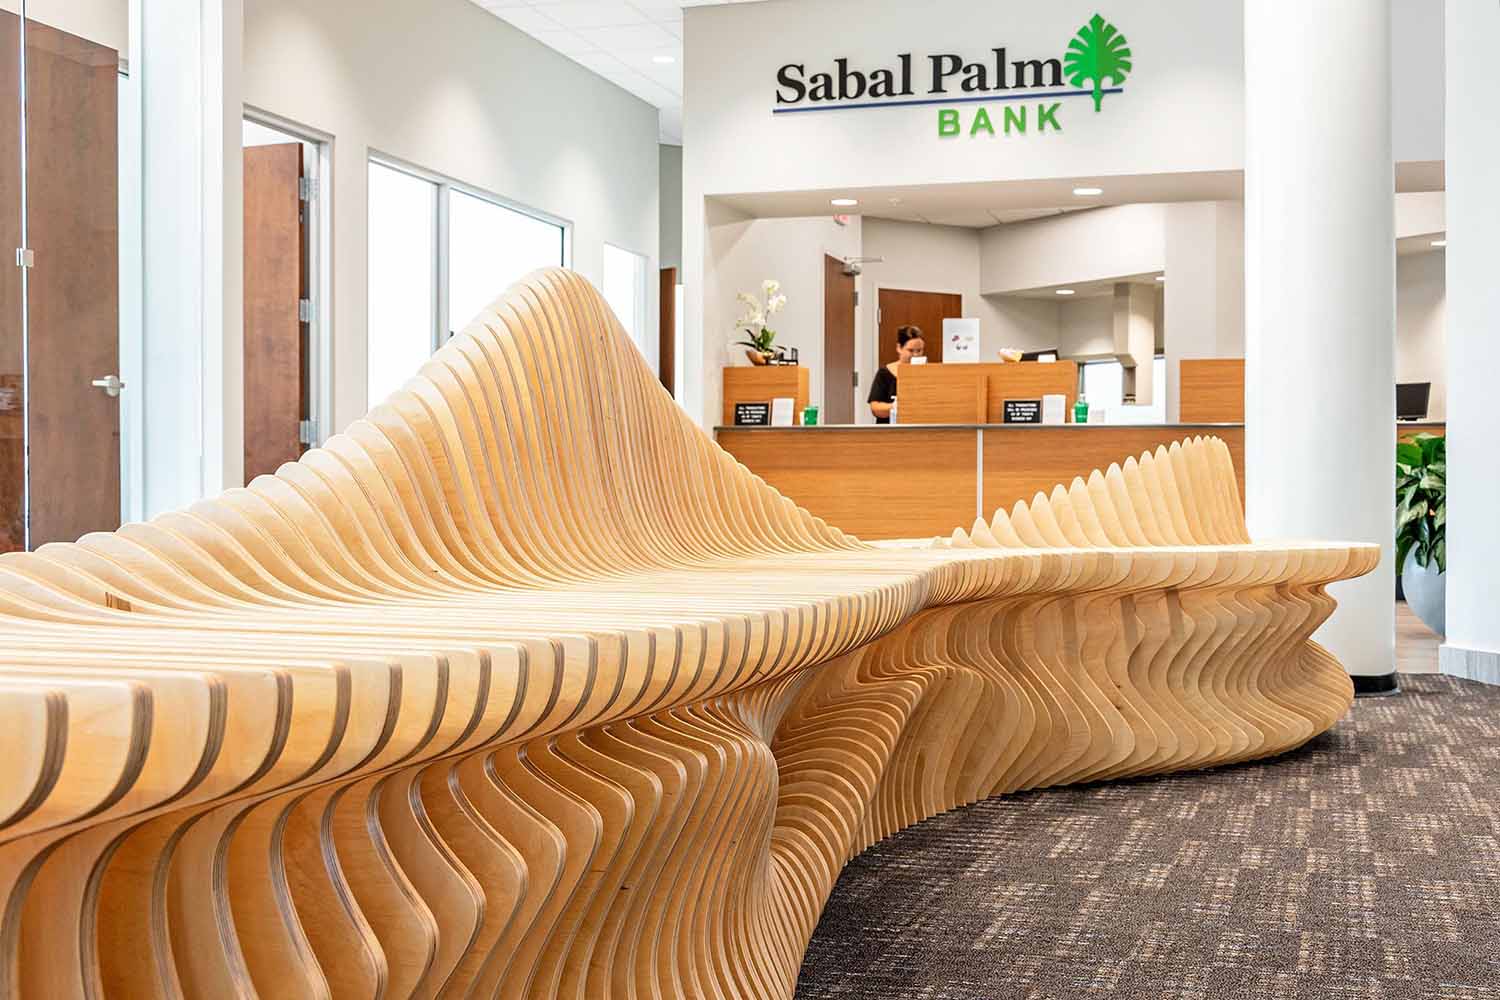 Sabal Palm bank